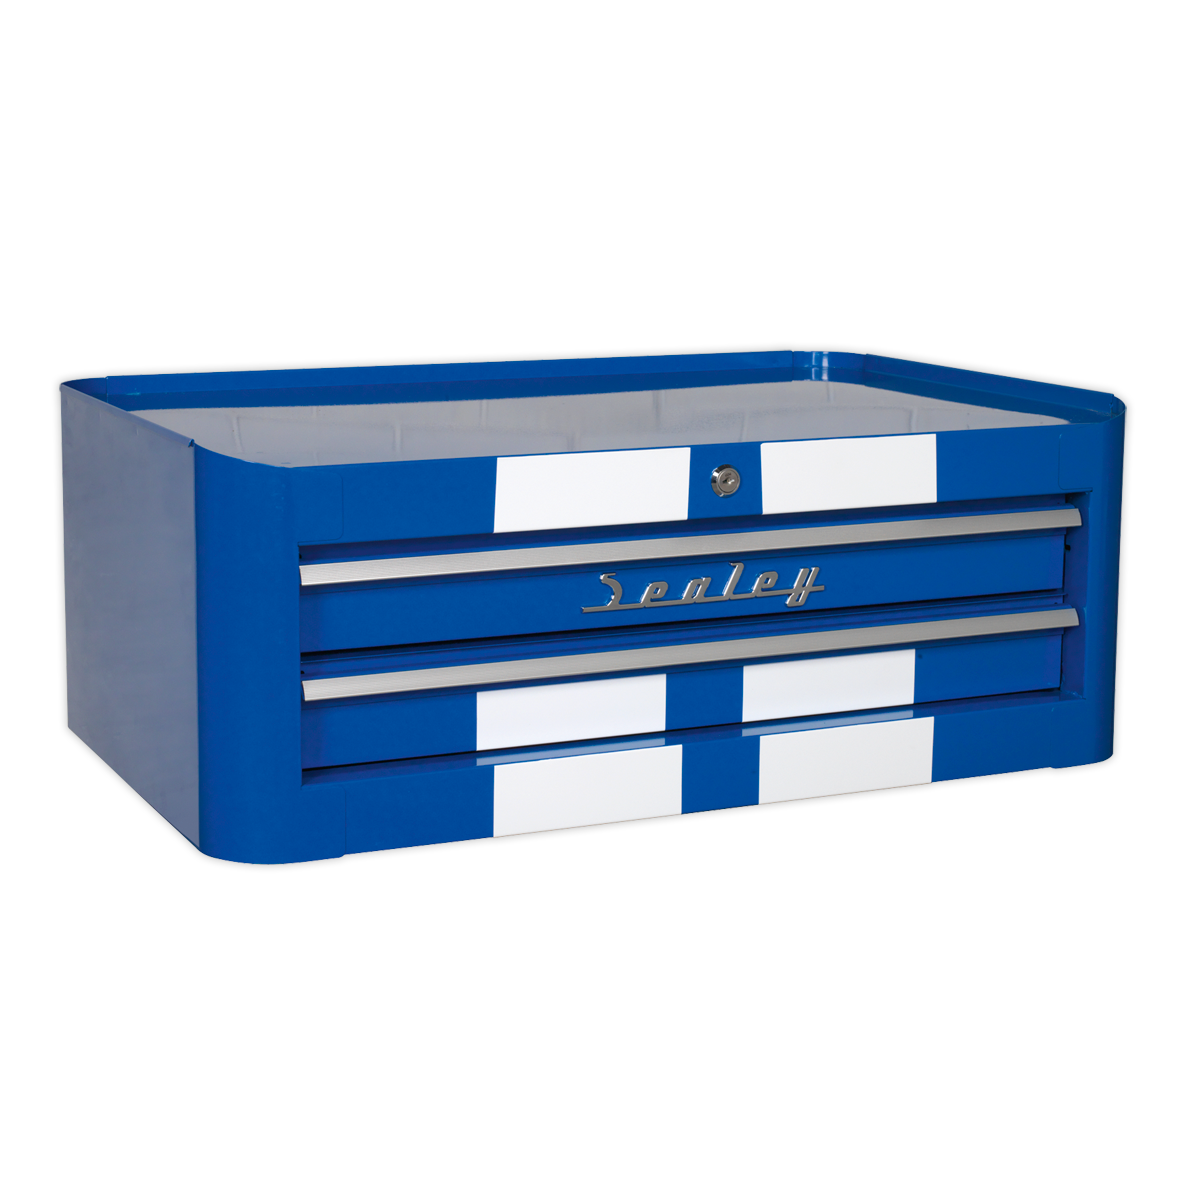 Sealey 2 Drawer Retro Style Mid-Box - Blue with White Stripes AP28102BWS